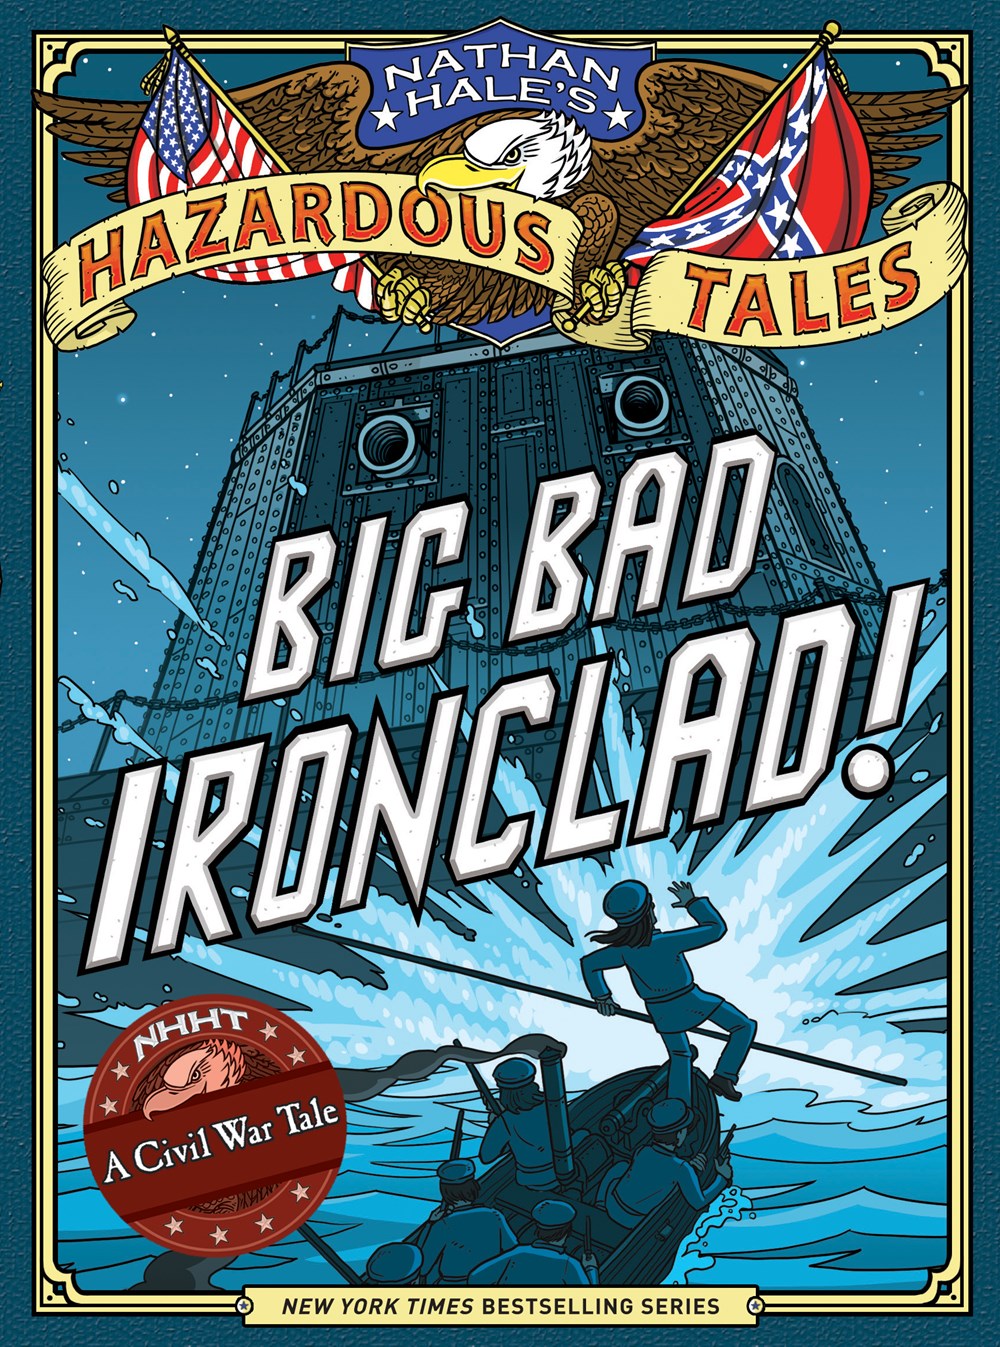 Nathan Hale's Hazardous Tales: Big Bad: Big Bad Ironclad!